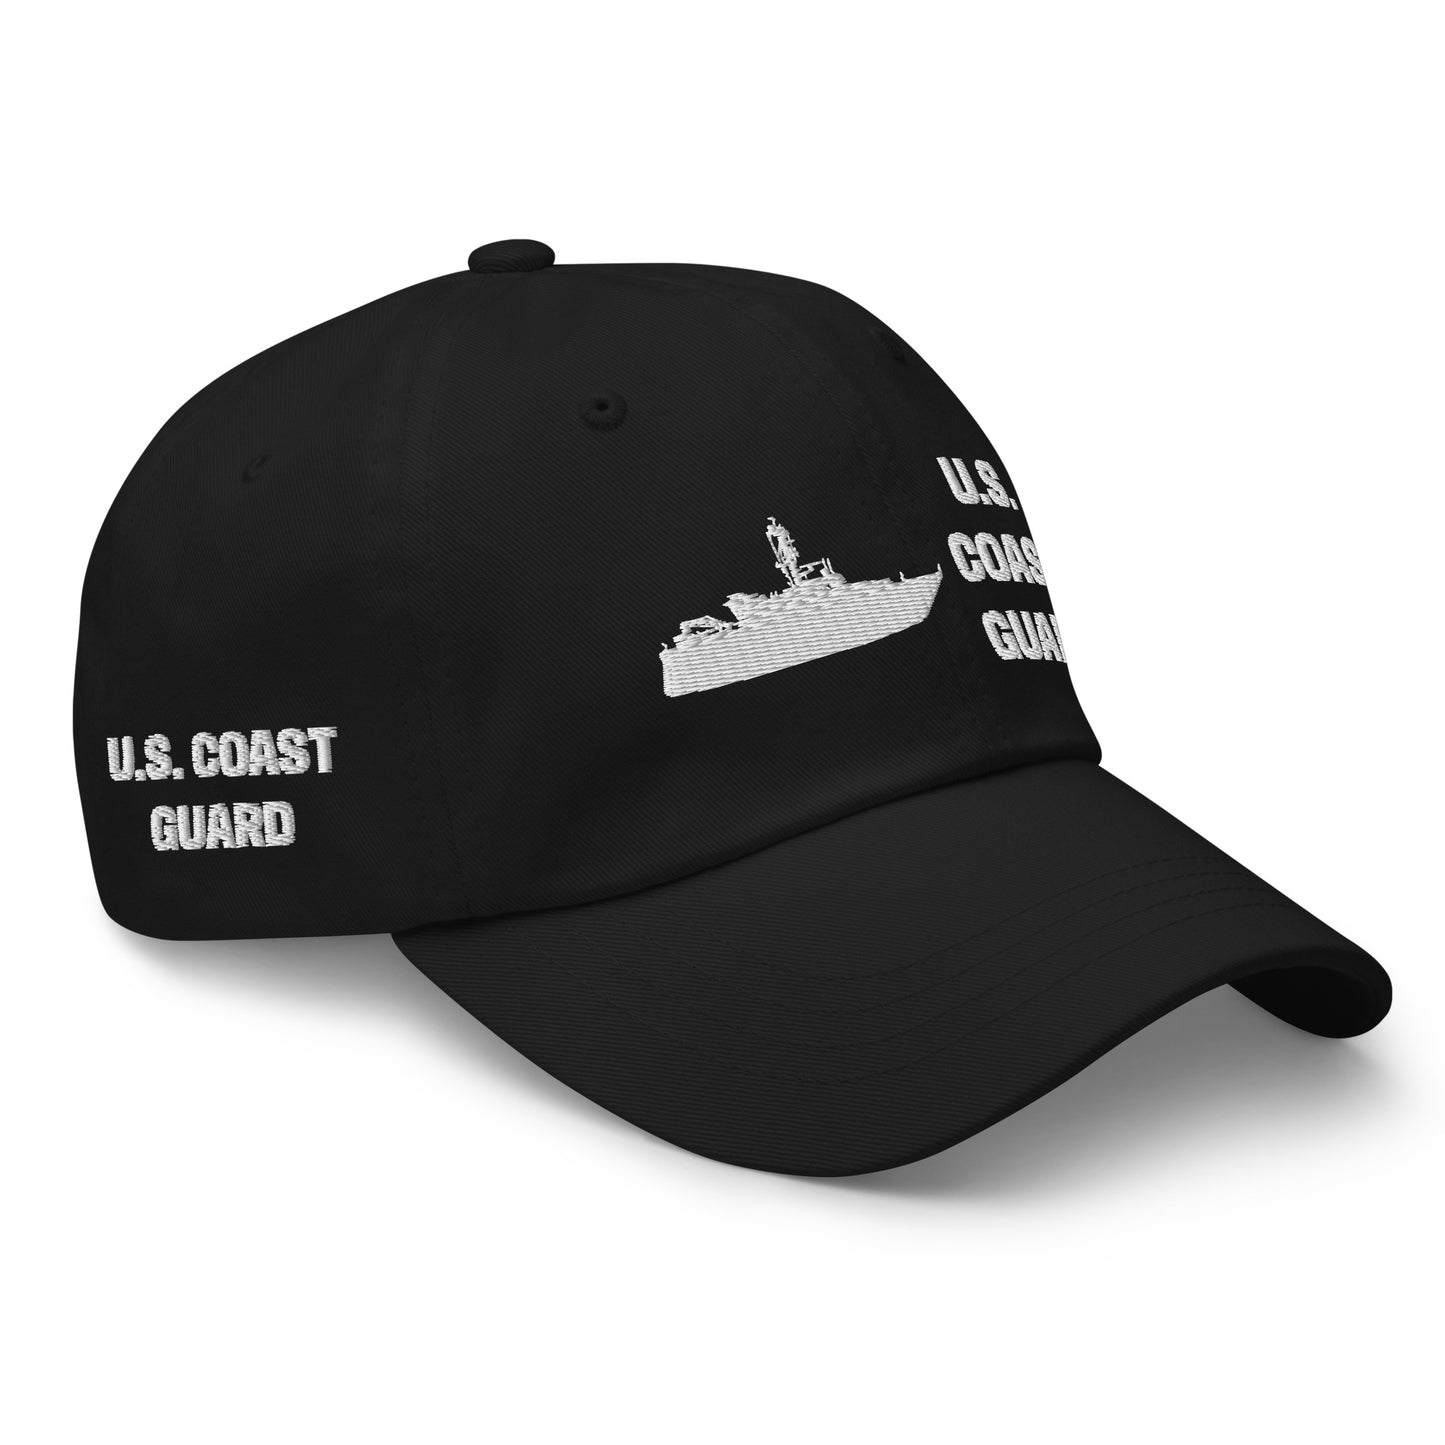 Dad hat - U.S. Coast Guard (Ship)